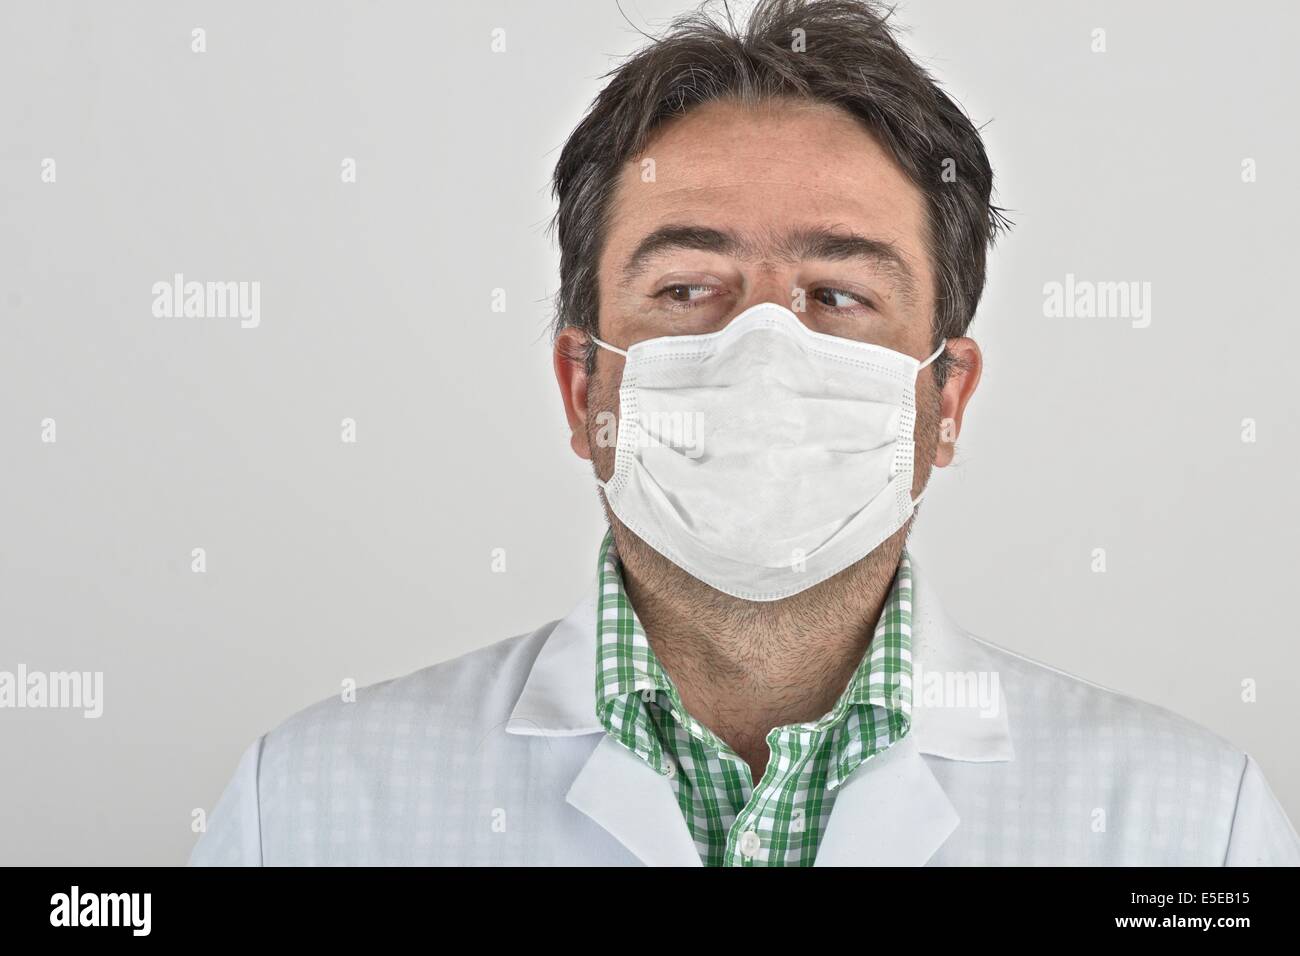 Hispanic doctor with face mask. Stock Photo